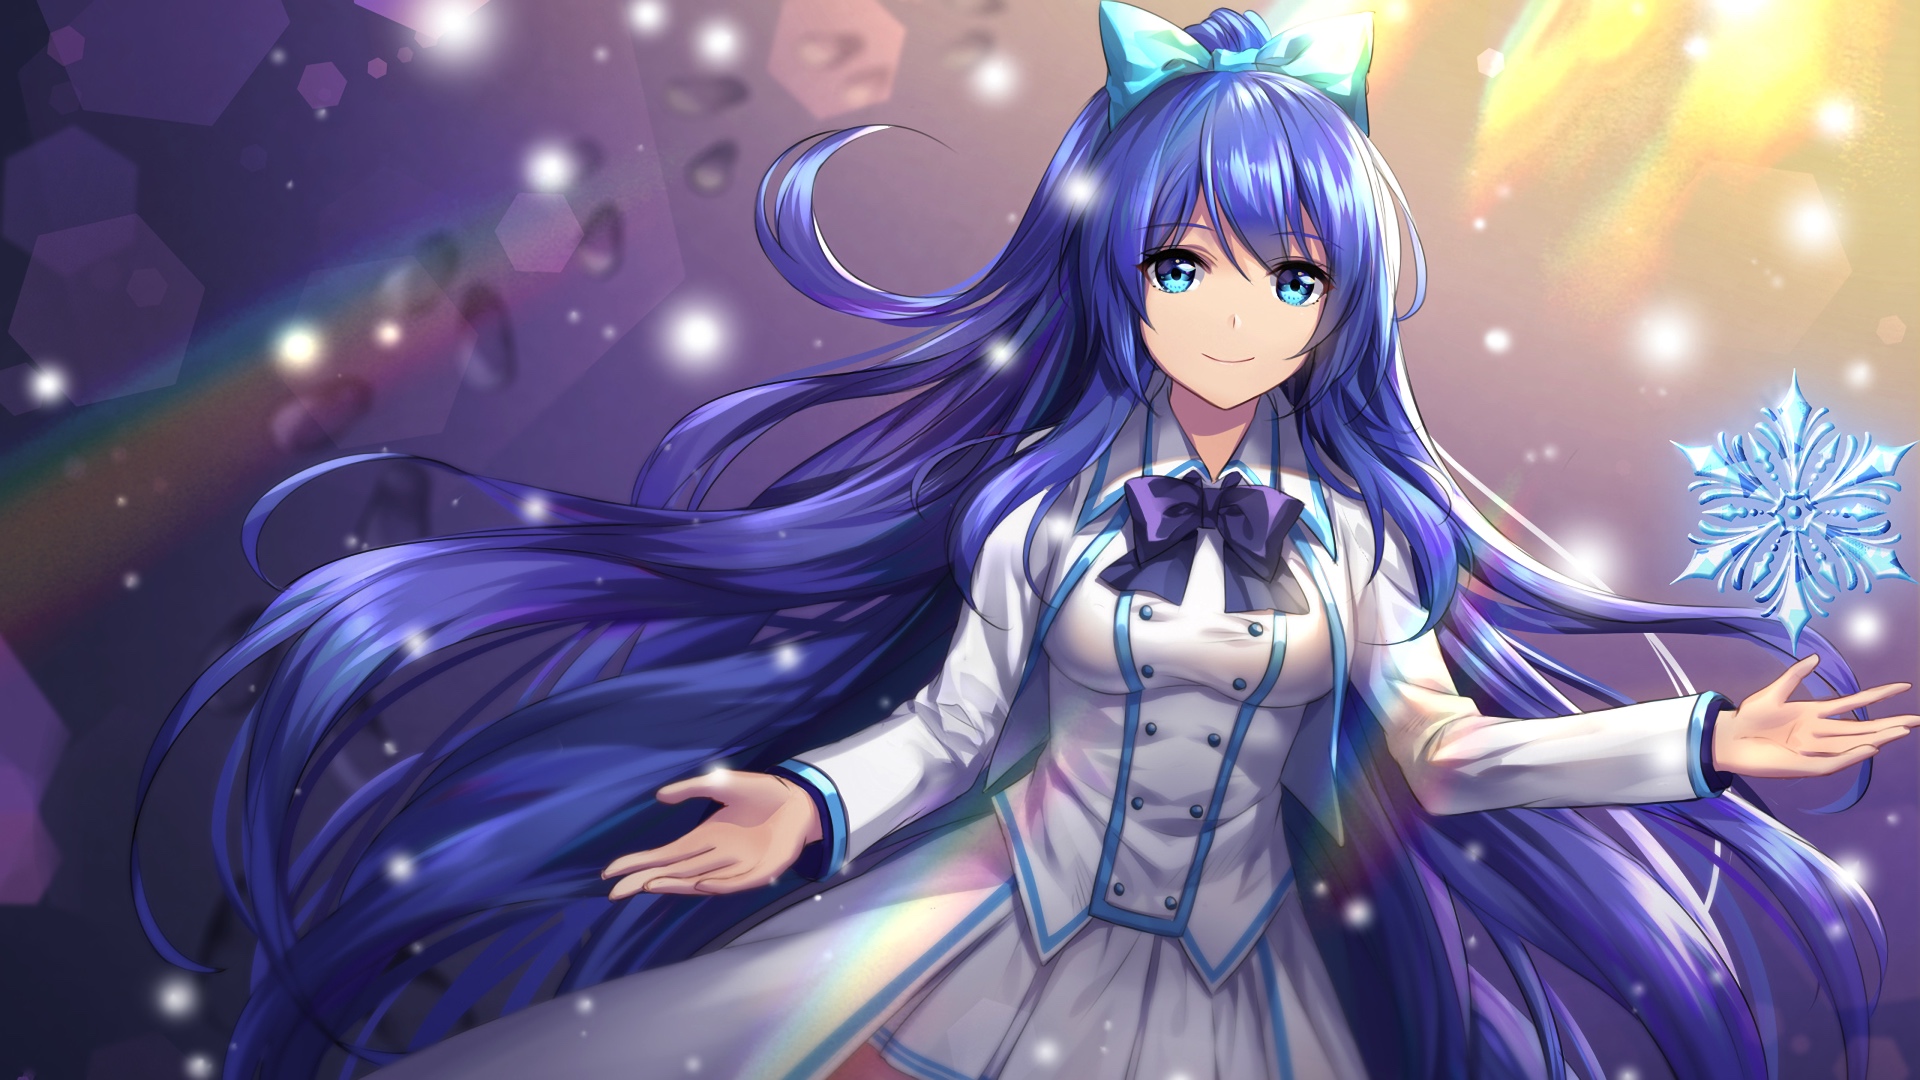 Desktop Wallpaper Cute Anime Girl, Snowflakes, Blue Hair, Original, Hd  Image, Picture, Background, Vua9gg